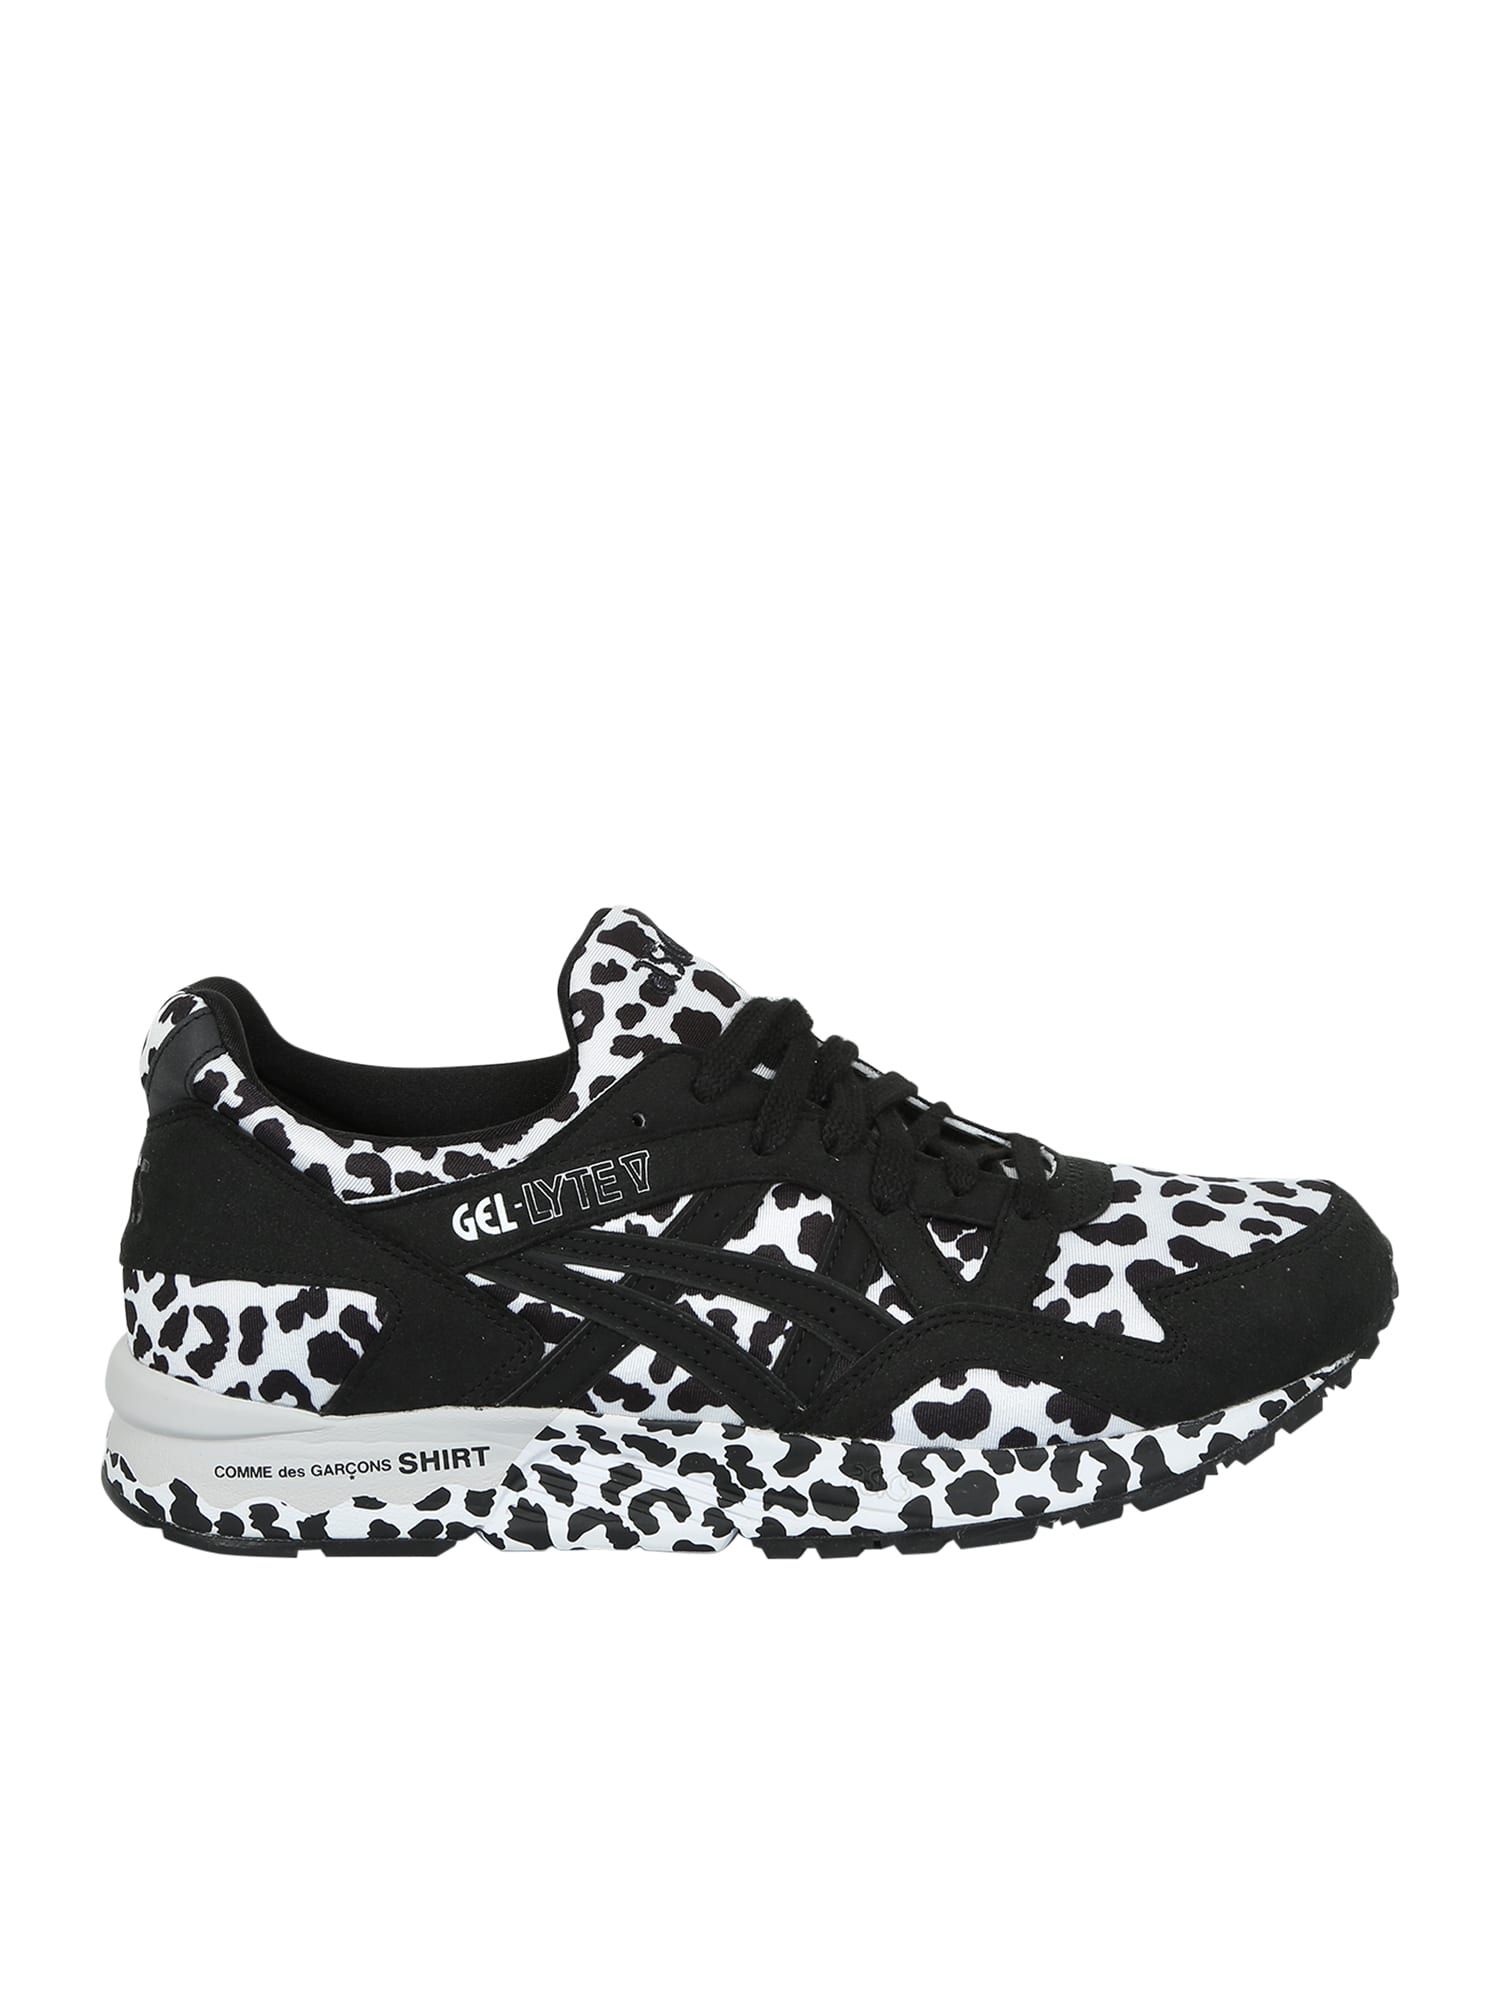 Leopard Print Asics Gel Lyte Sneakers